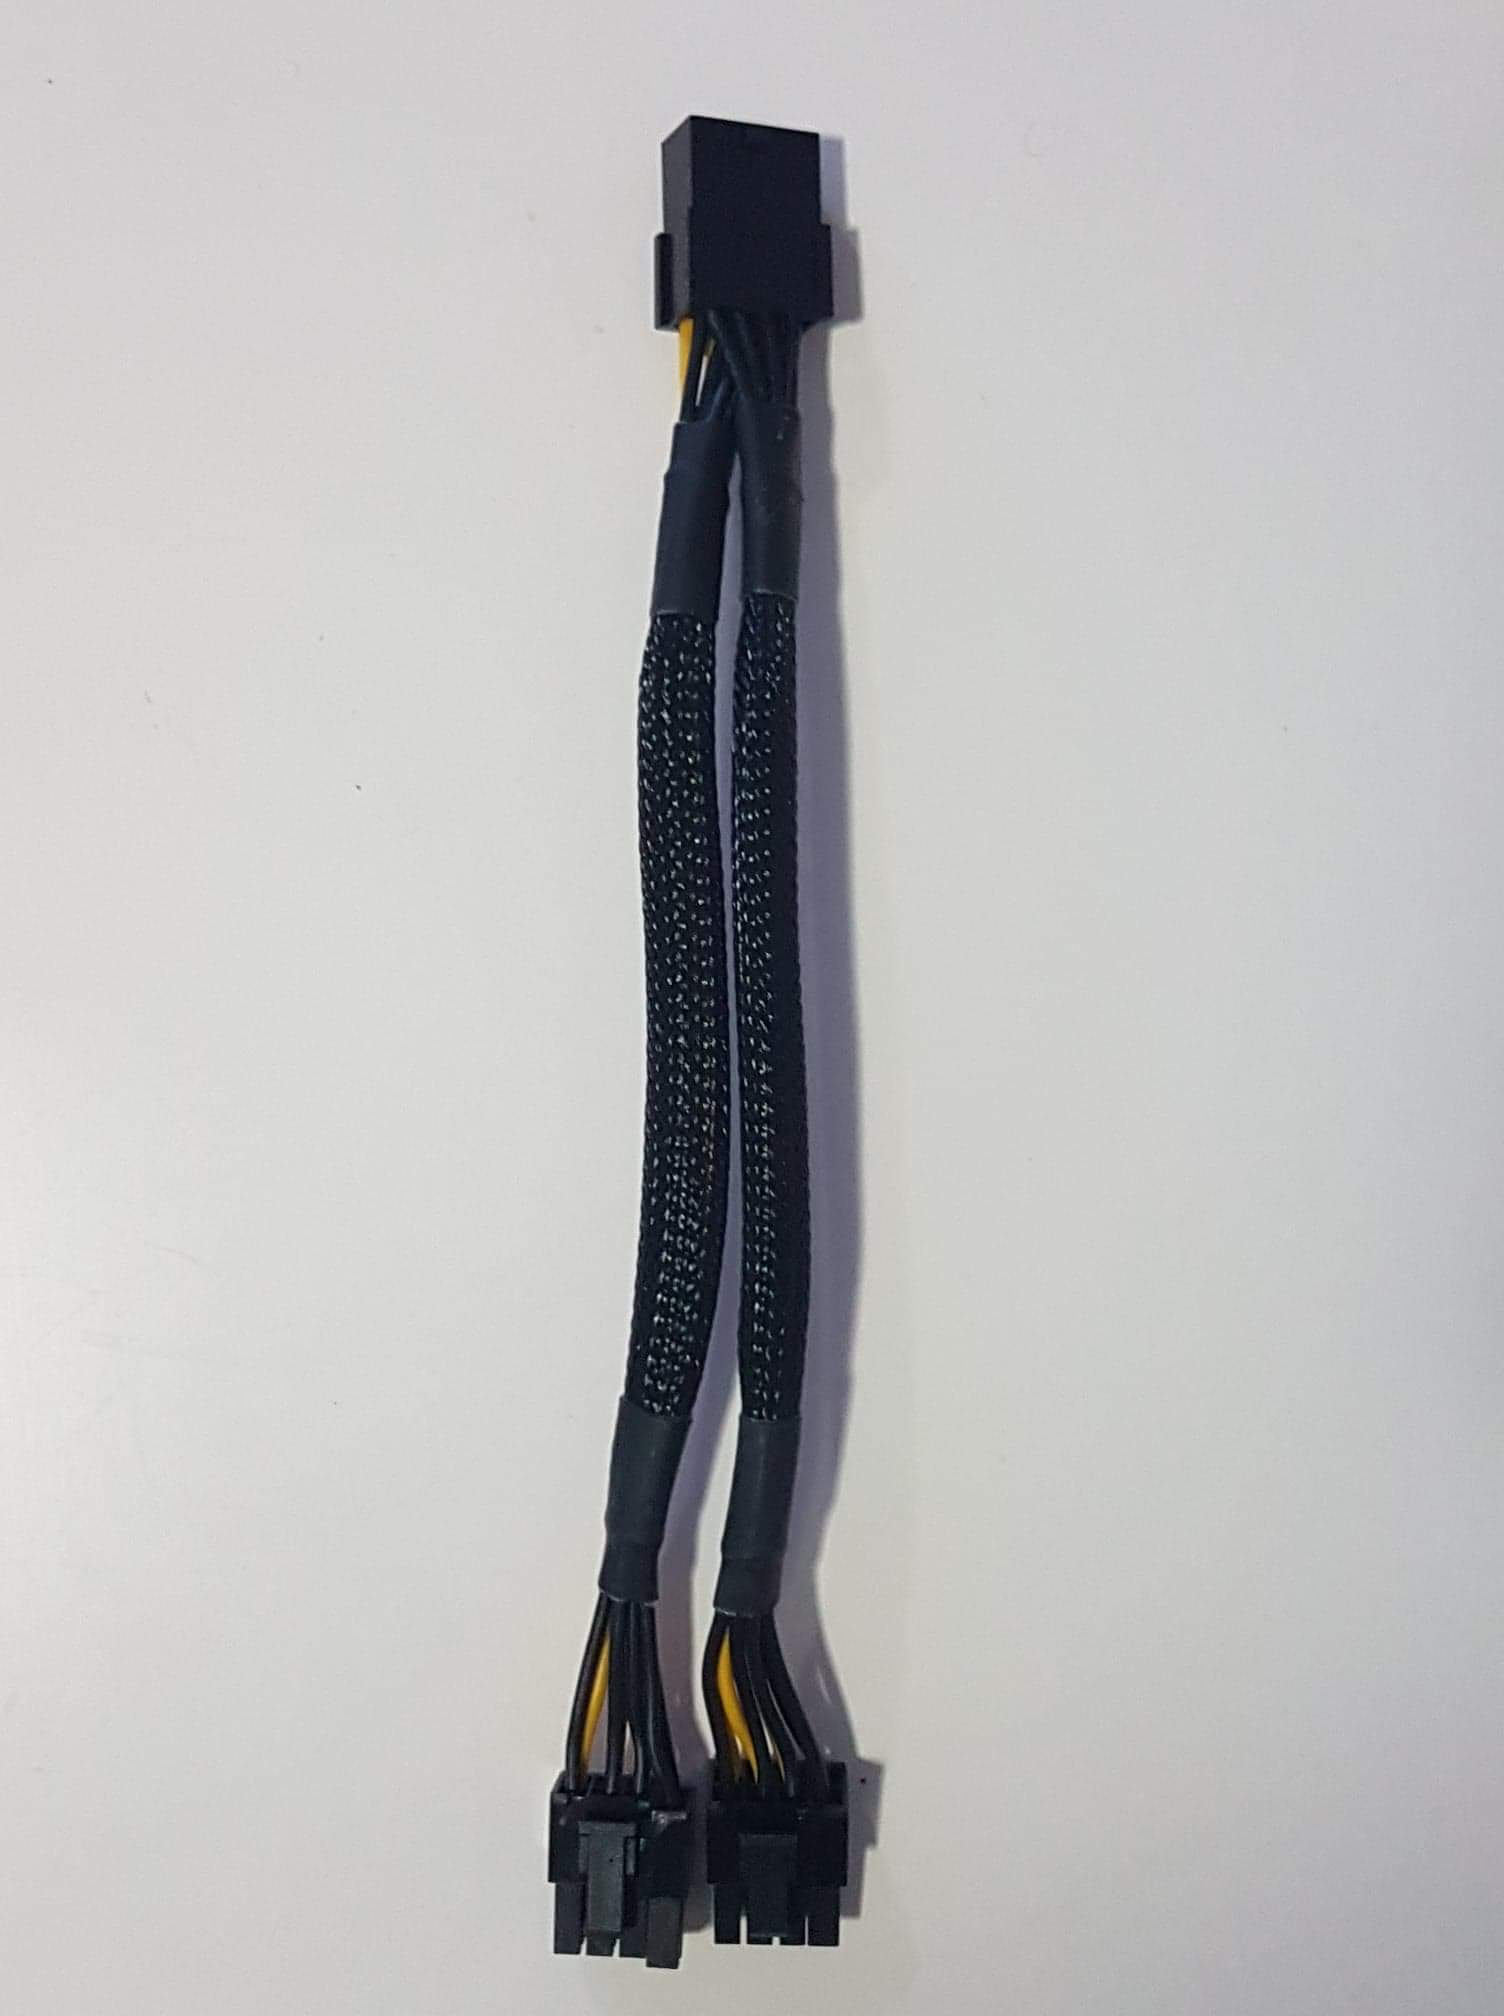 Heavy Duty PCIe 8 pin Female to dual 6+2pin male gpu splitter cable - AndoVolution Australia - GPU Risers - crypto mining - Located: North Lakes, Brisbane, QLD, Australia